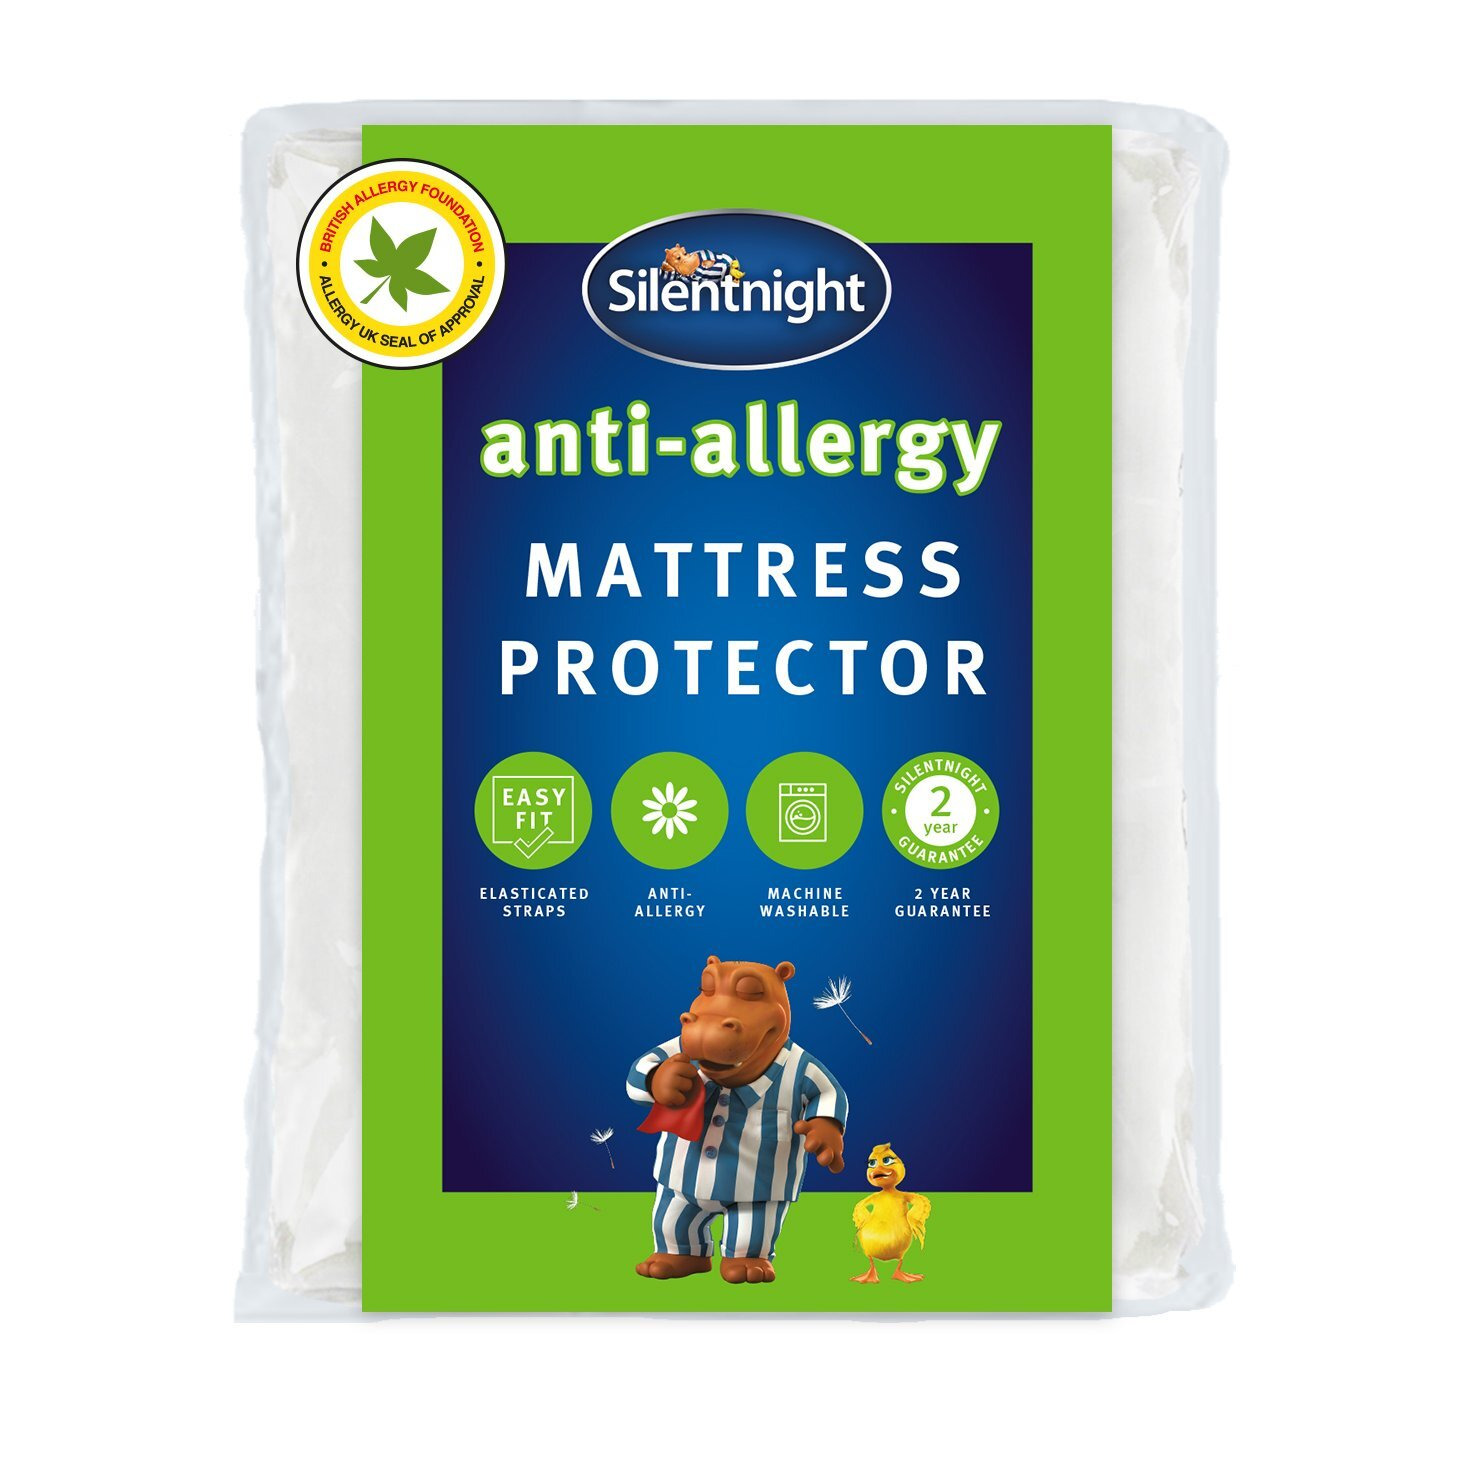 Silentnight Anti-Allergy Mattress Protector - Single - image 1